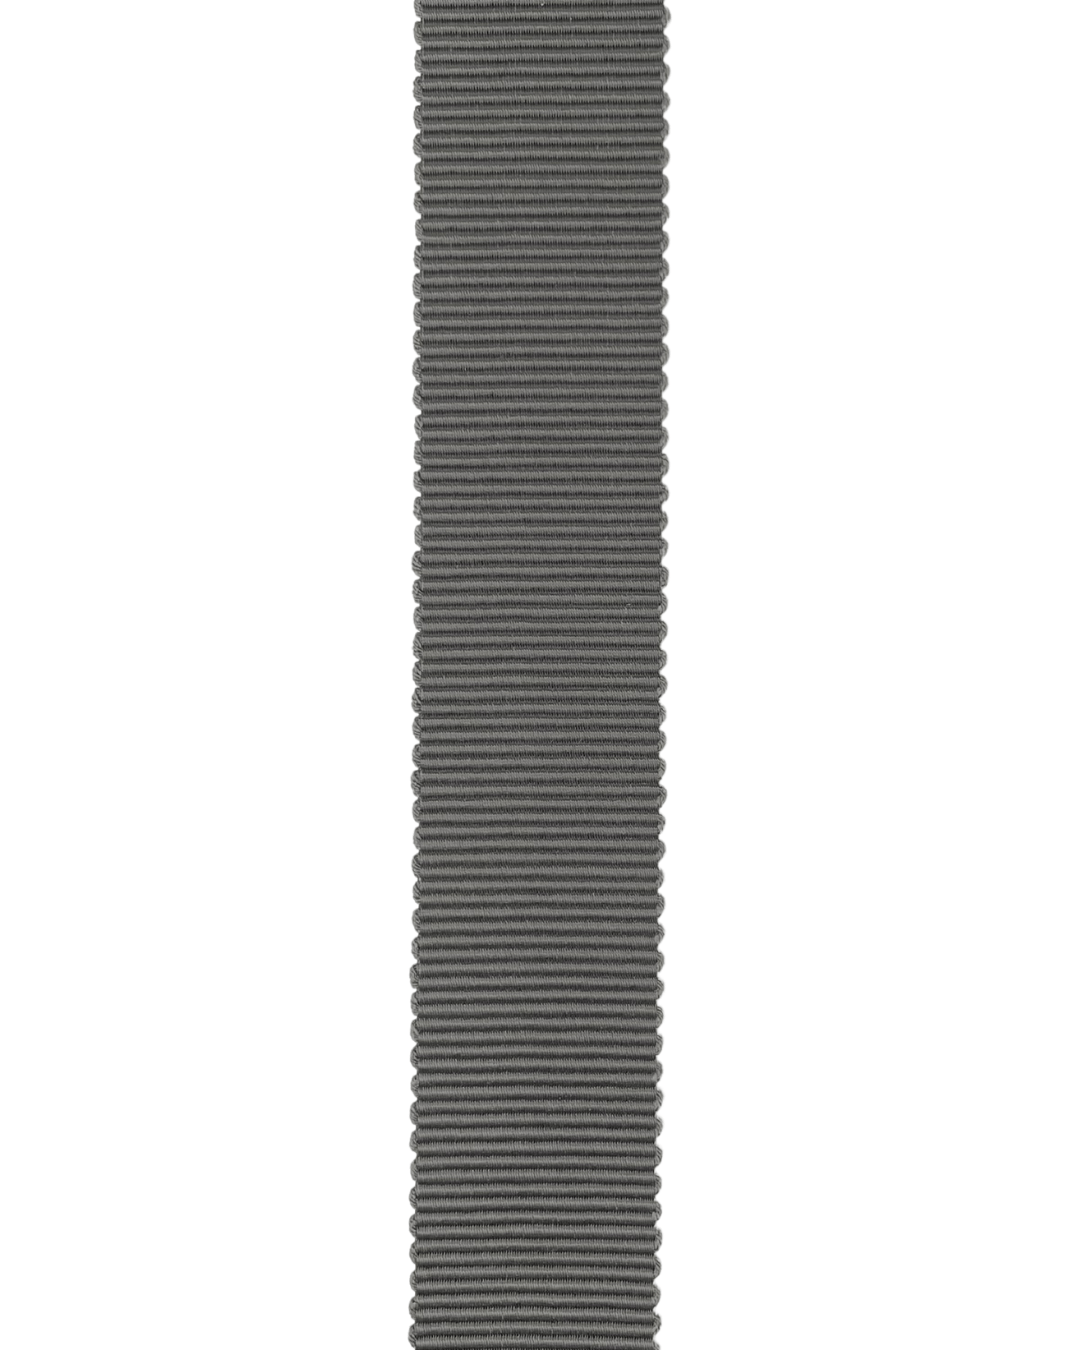 MOKUBA 26mm Grosgrain Ribbon 10m Roll - 4 Colors Available - American Deadstock